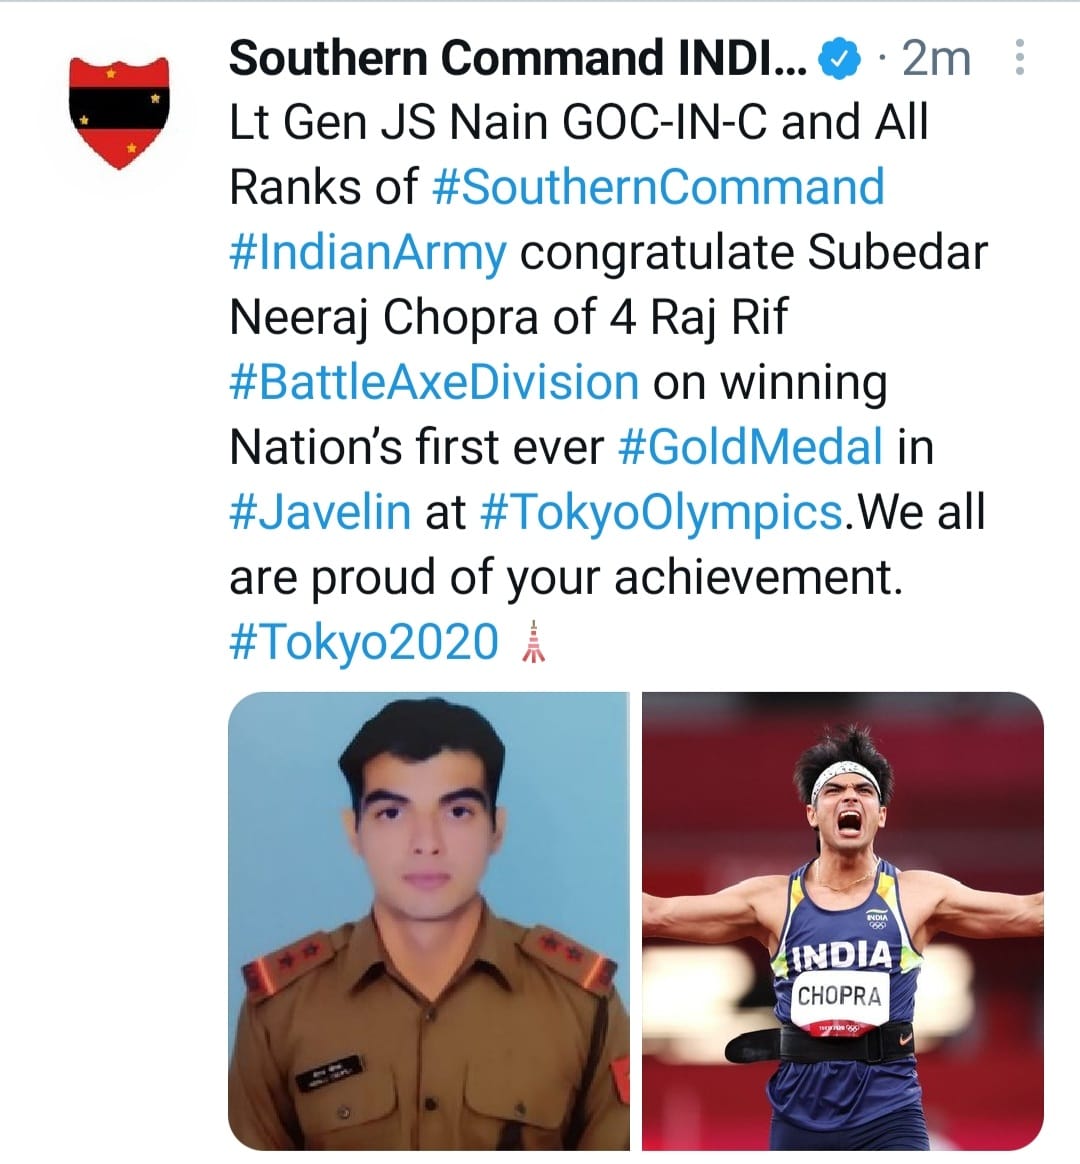 Southern command congratulated Subedar Neeraj